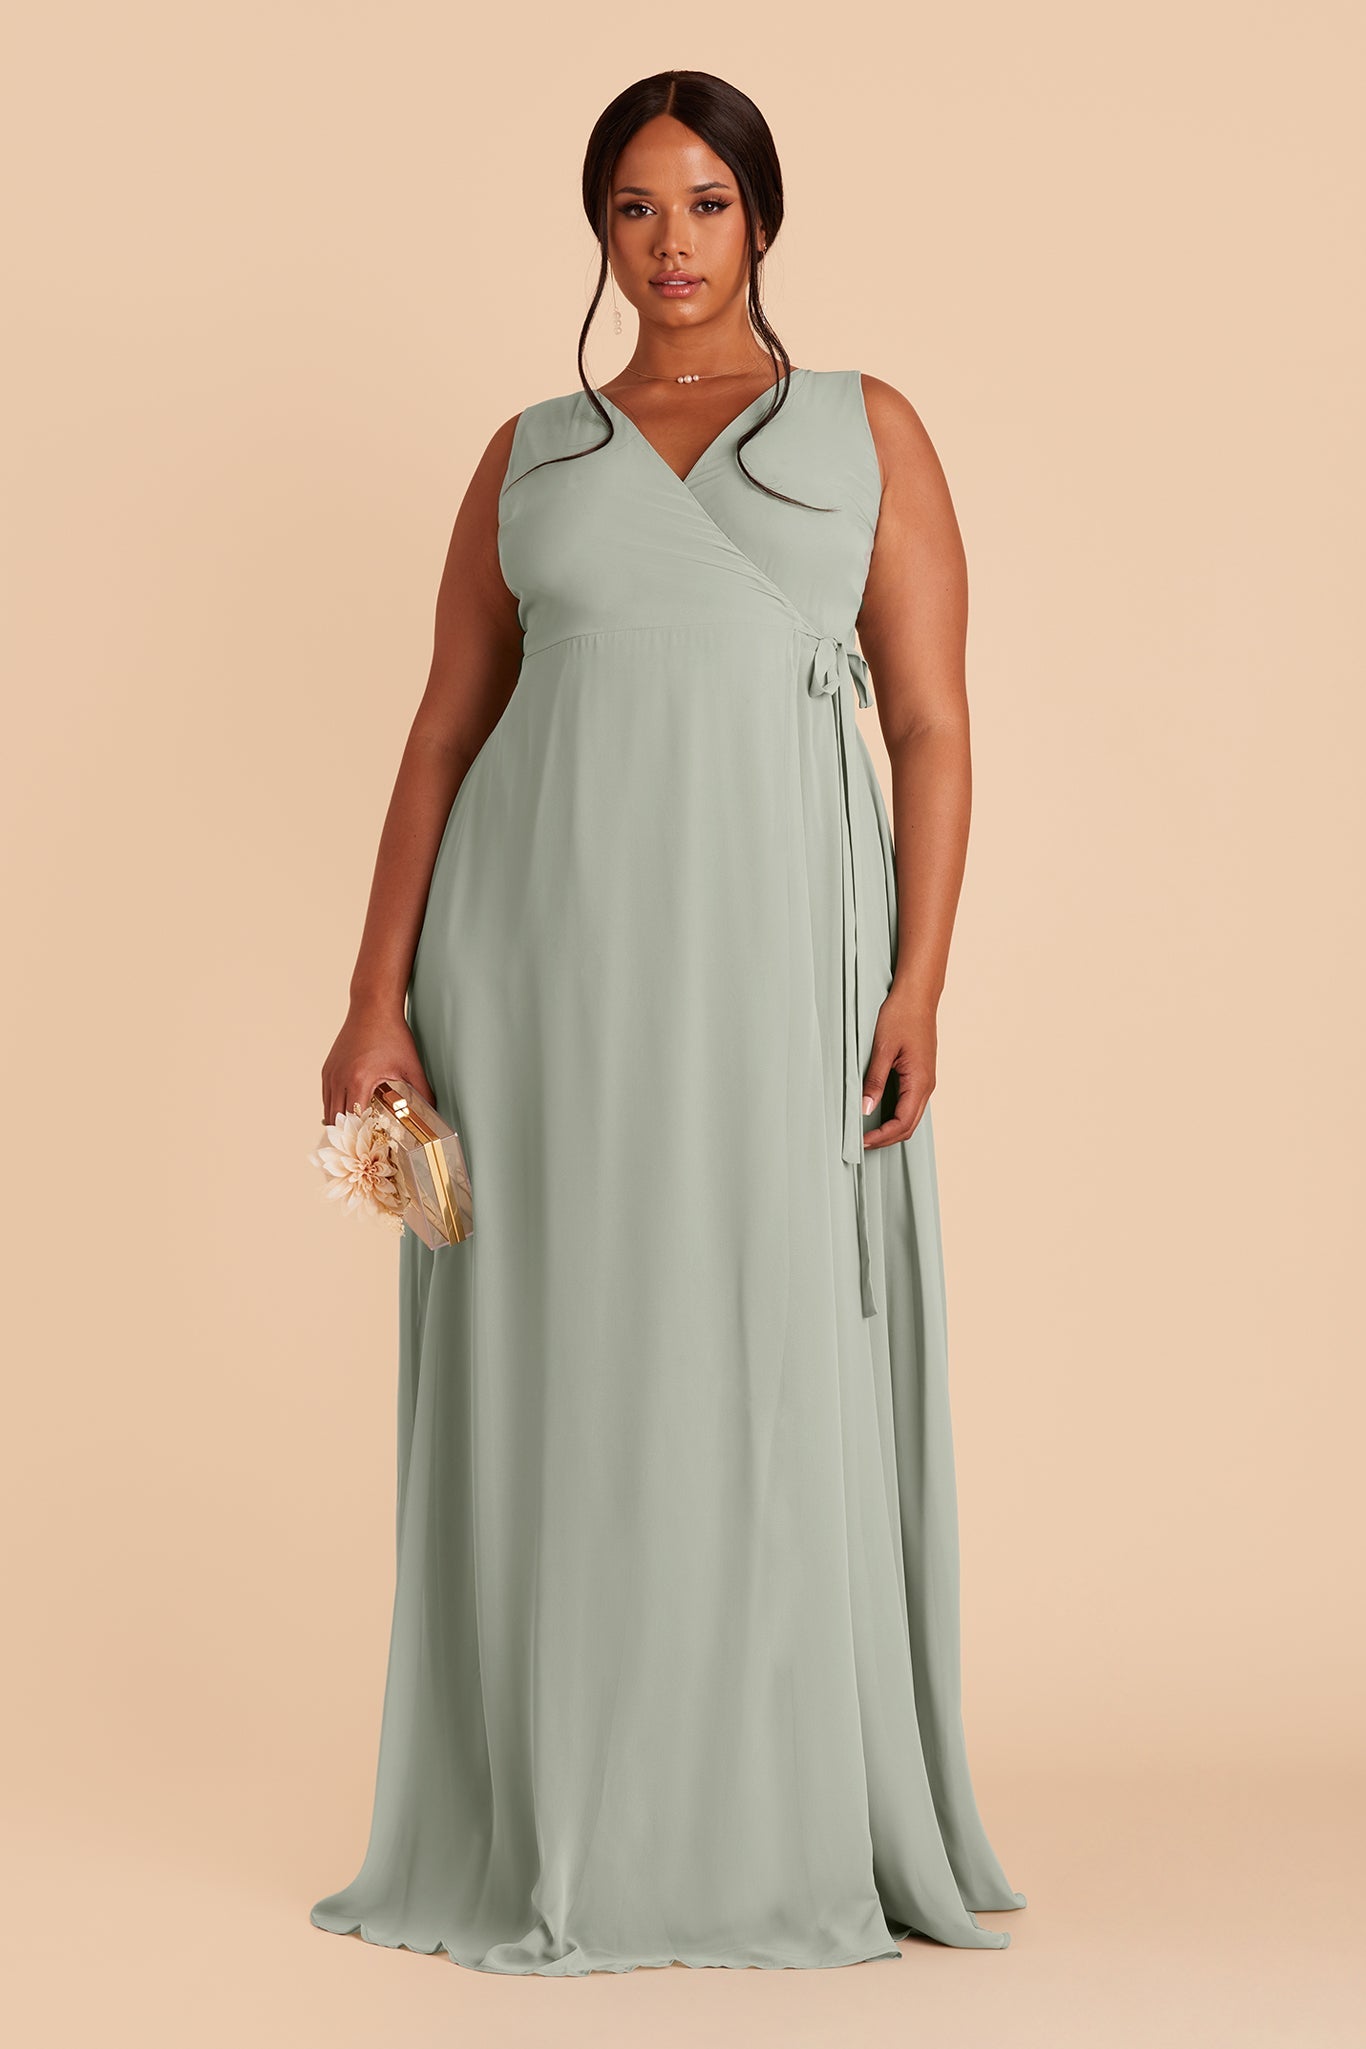 Plus Size Bridesmaid Dresses $100 | Birdy Grey